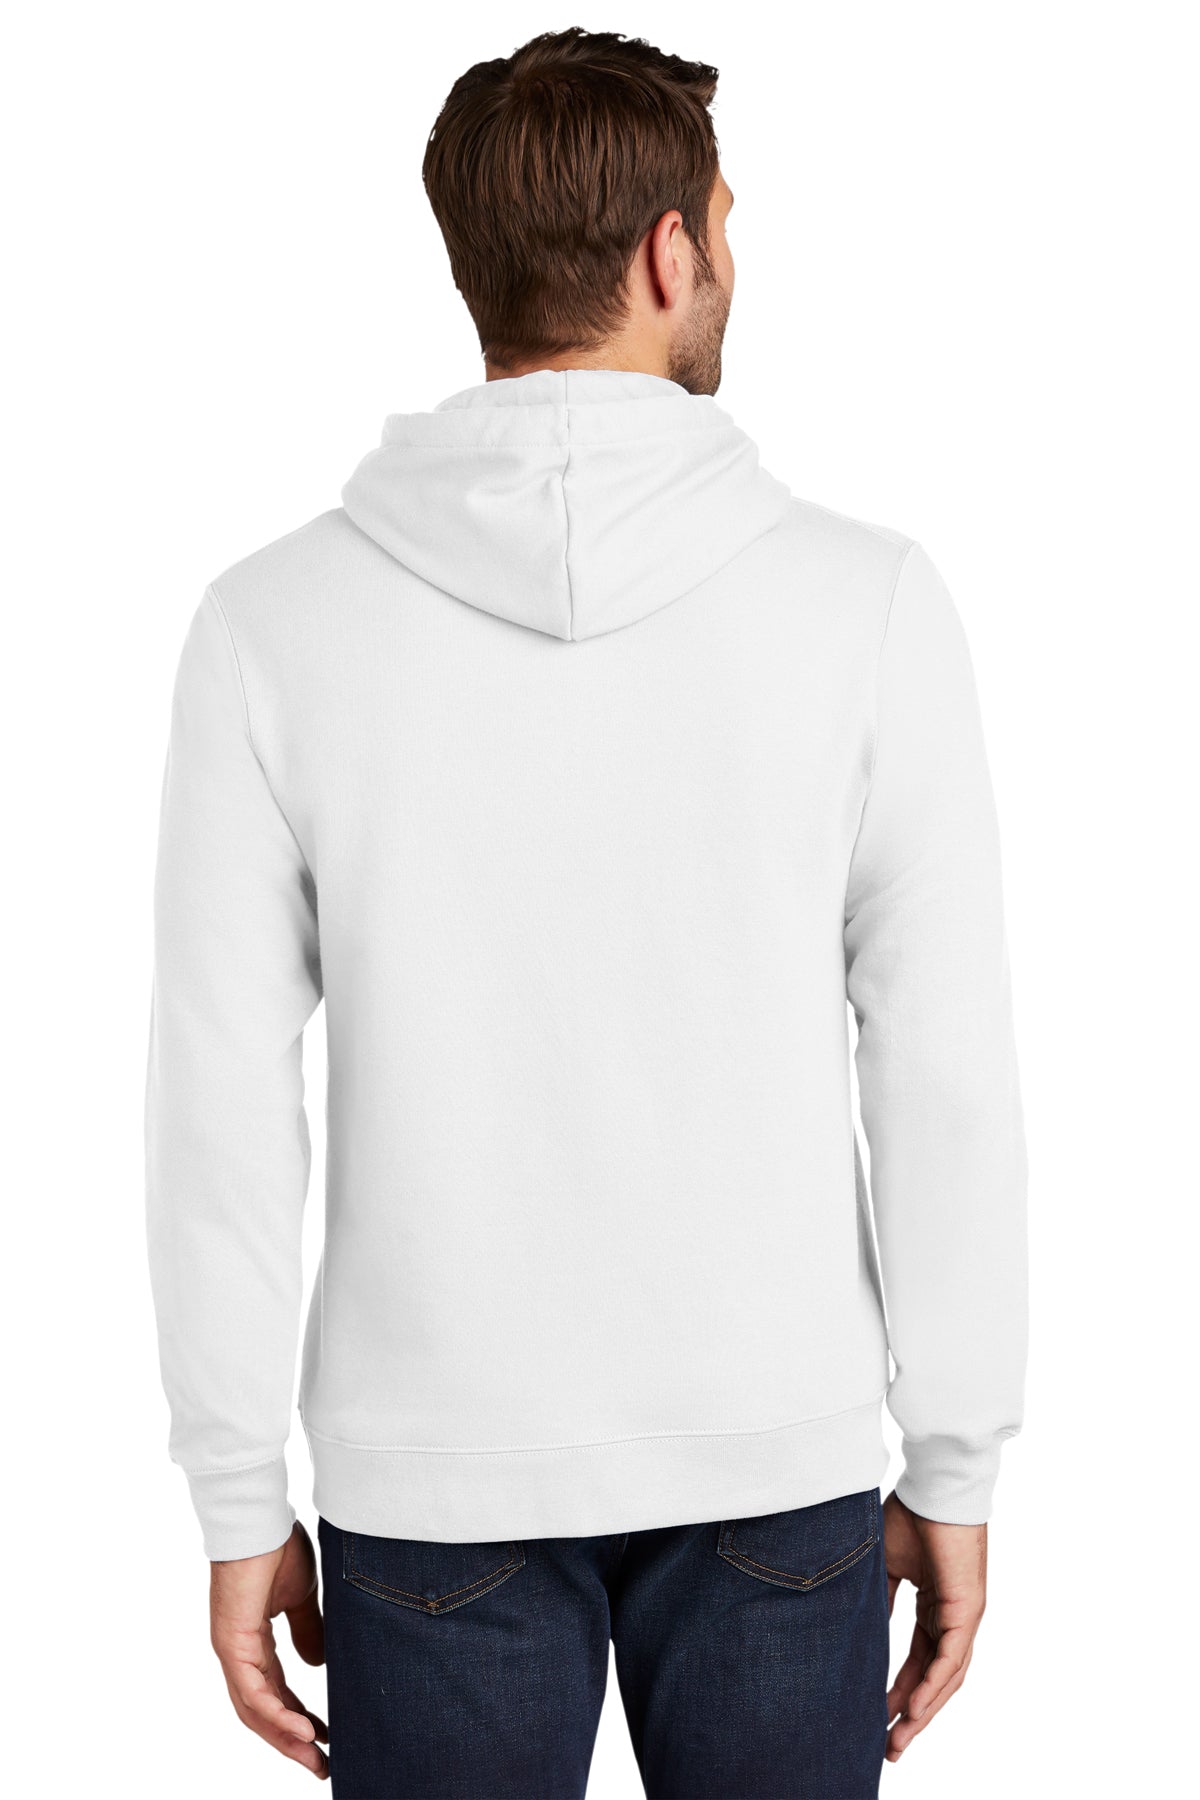 port & company_pc850h _white_company_logo_sweatshirts